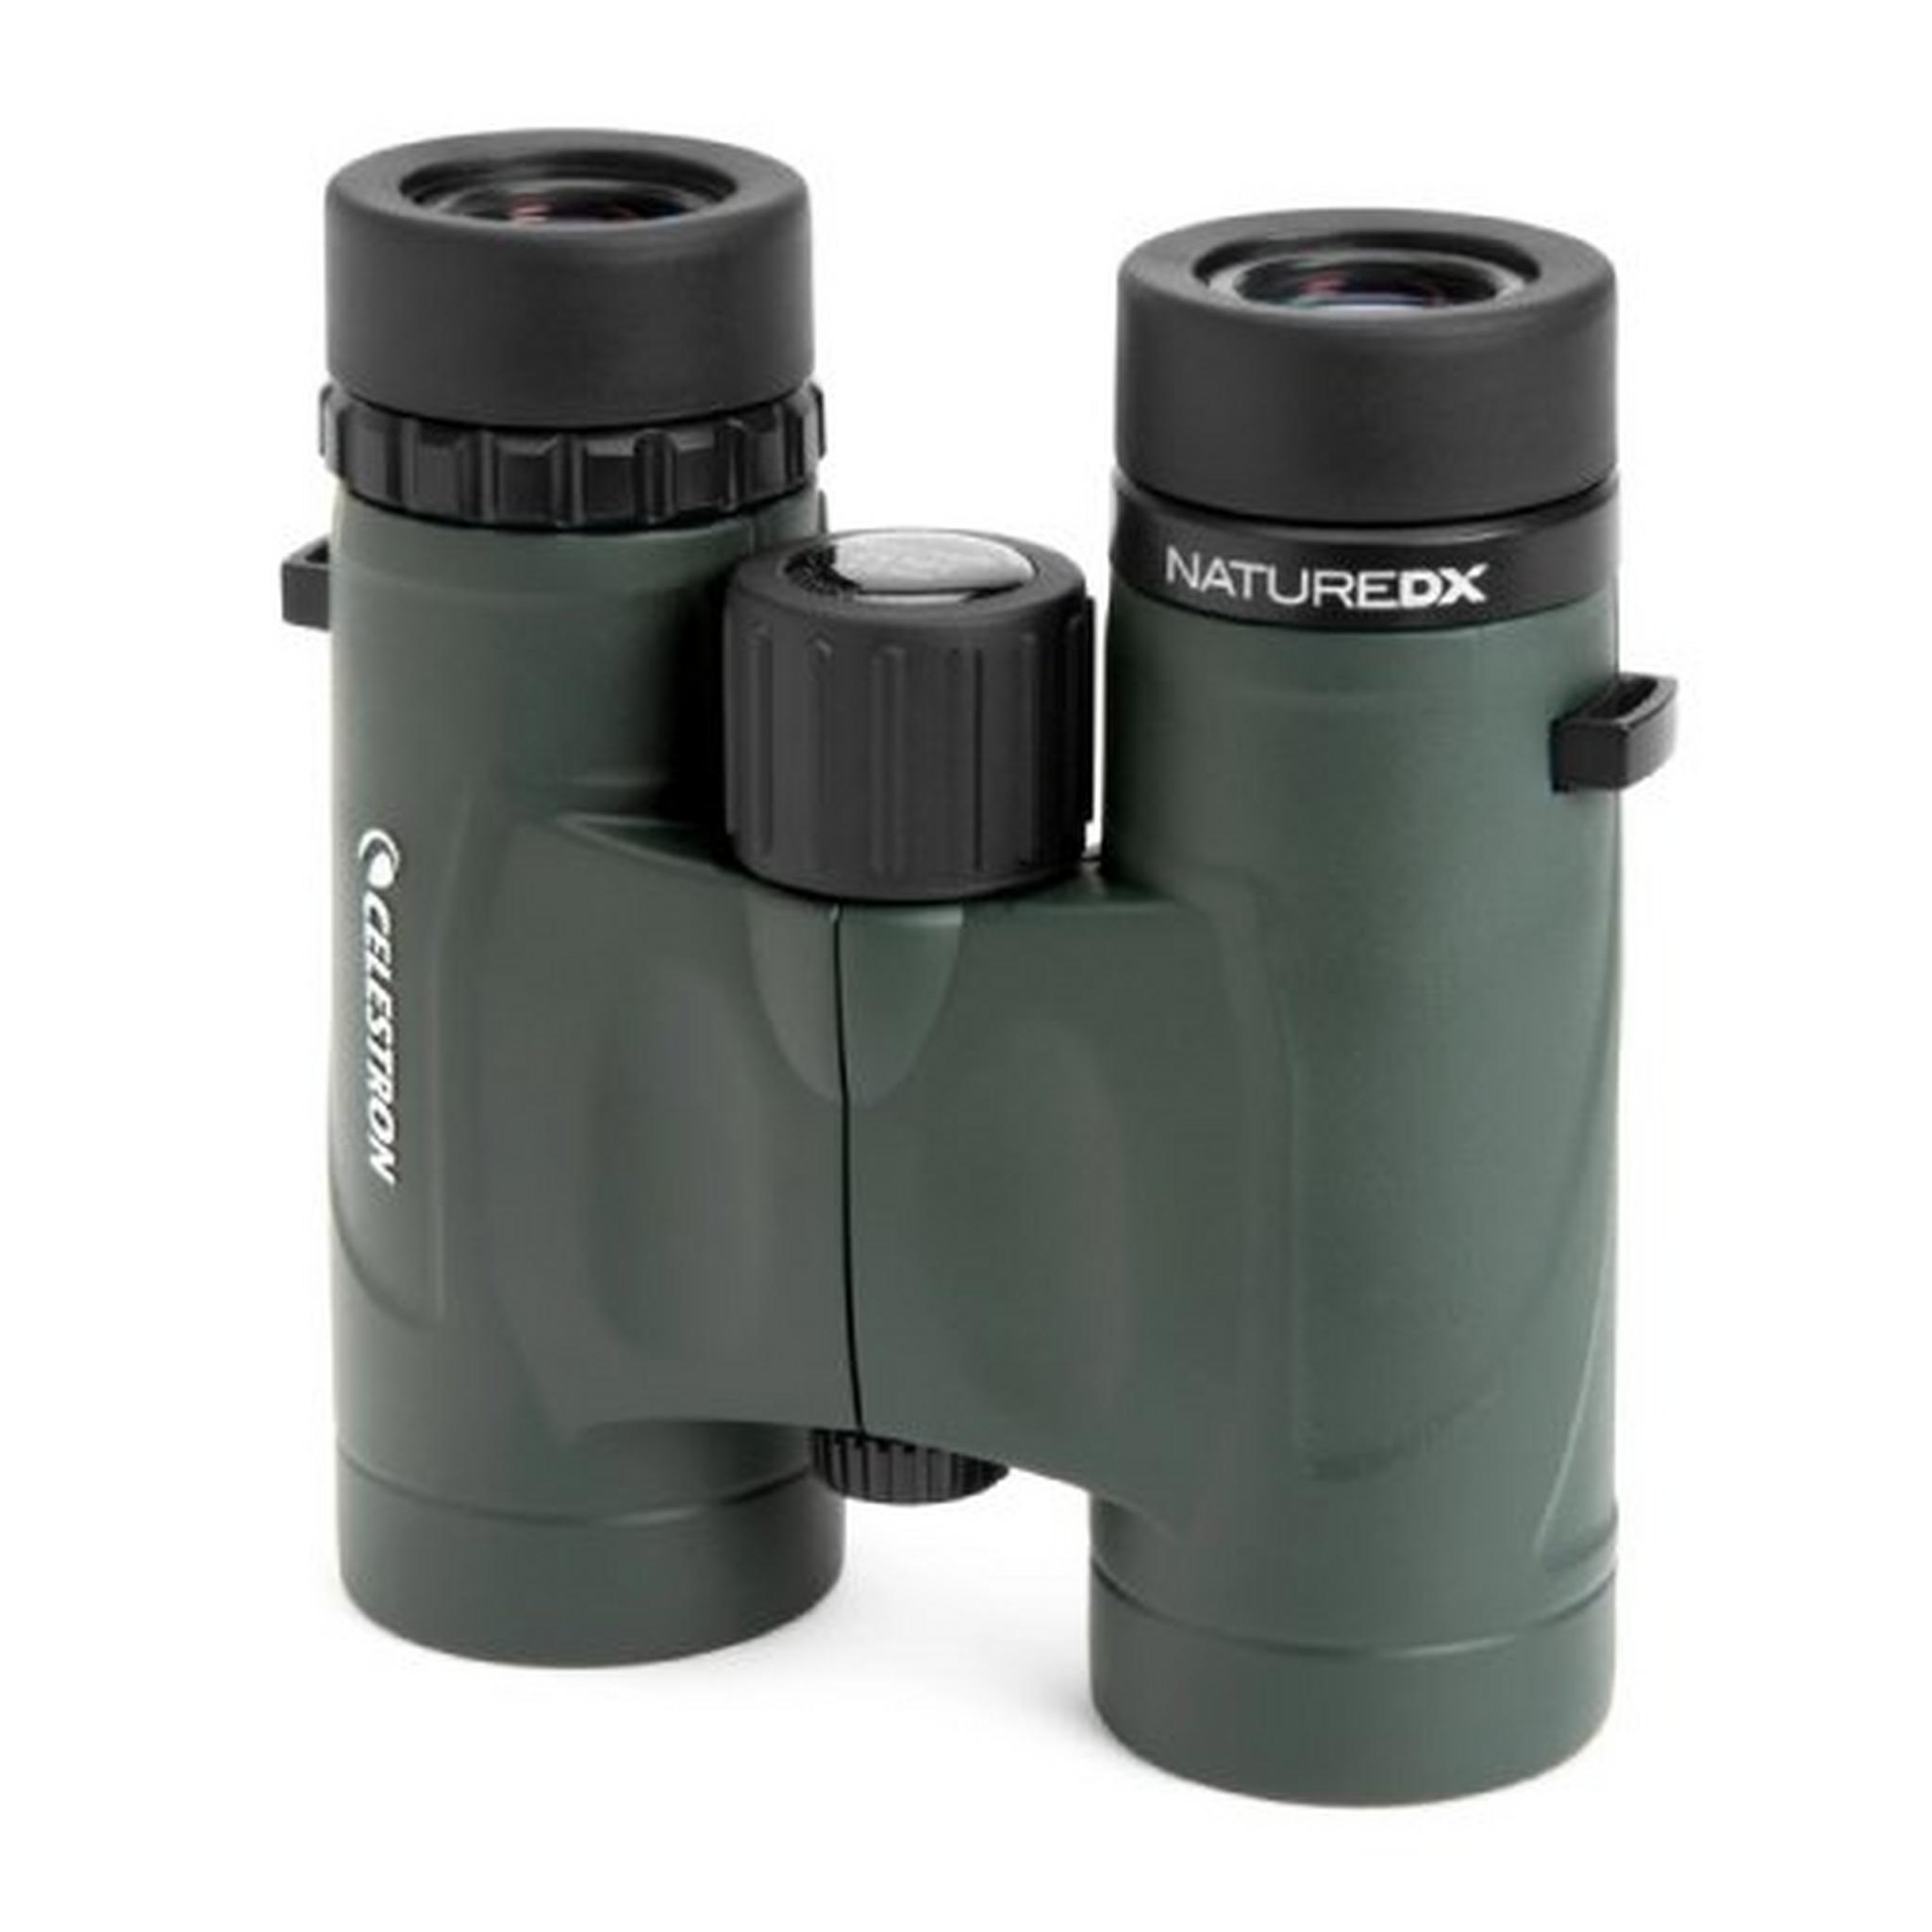 Celestron Nature DX 8X32 Binoculars